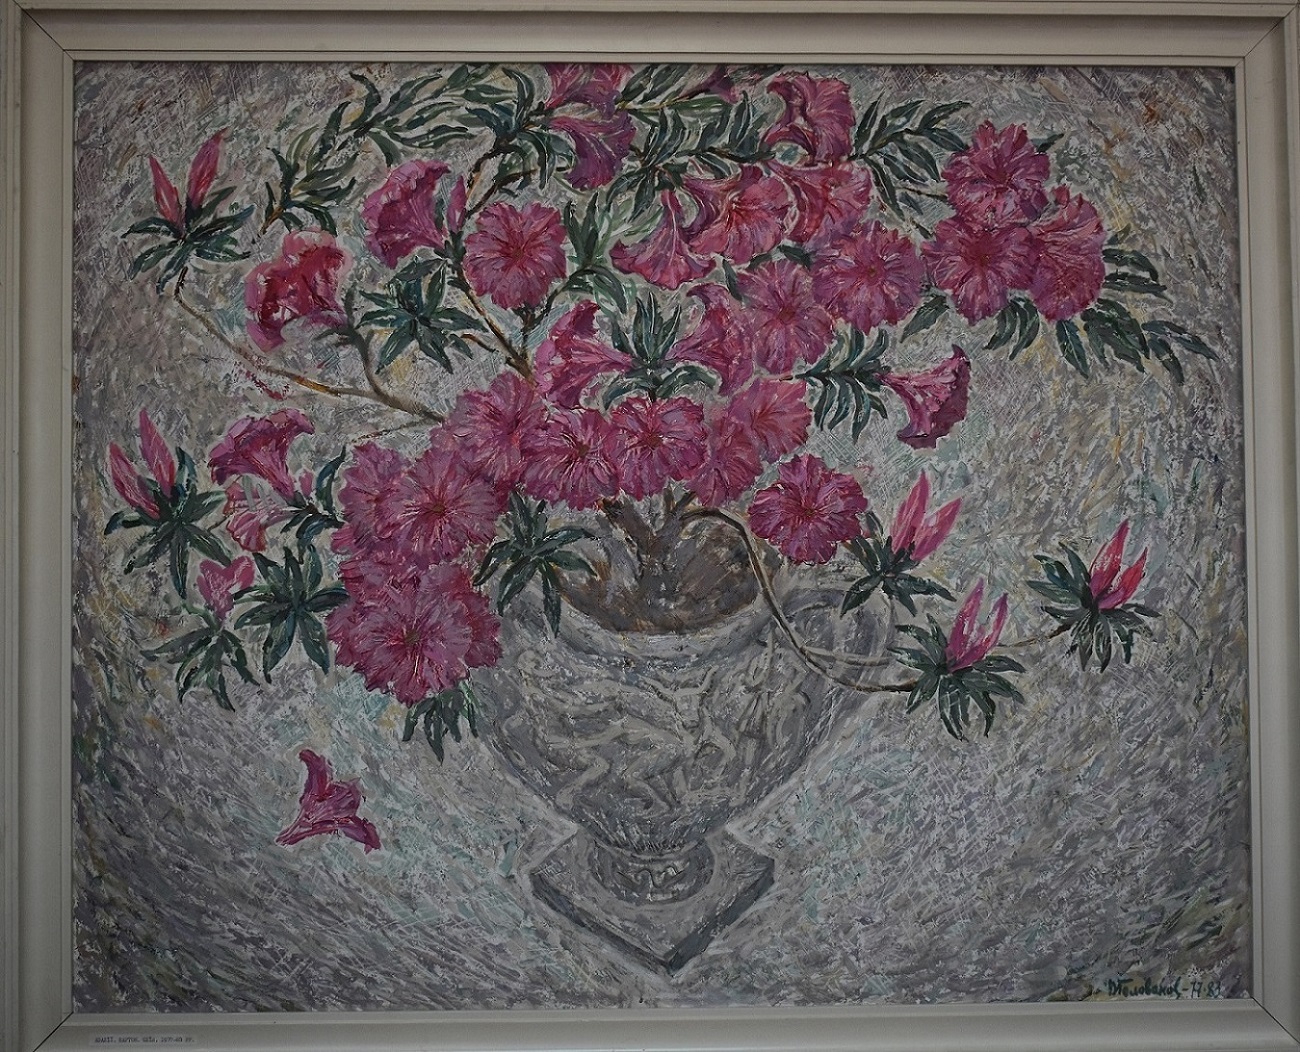 Мистецтво. Картина художника В. Ф. Голованова "Азалії" 1977 - 1983 рр.